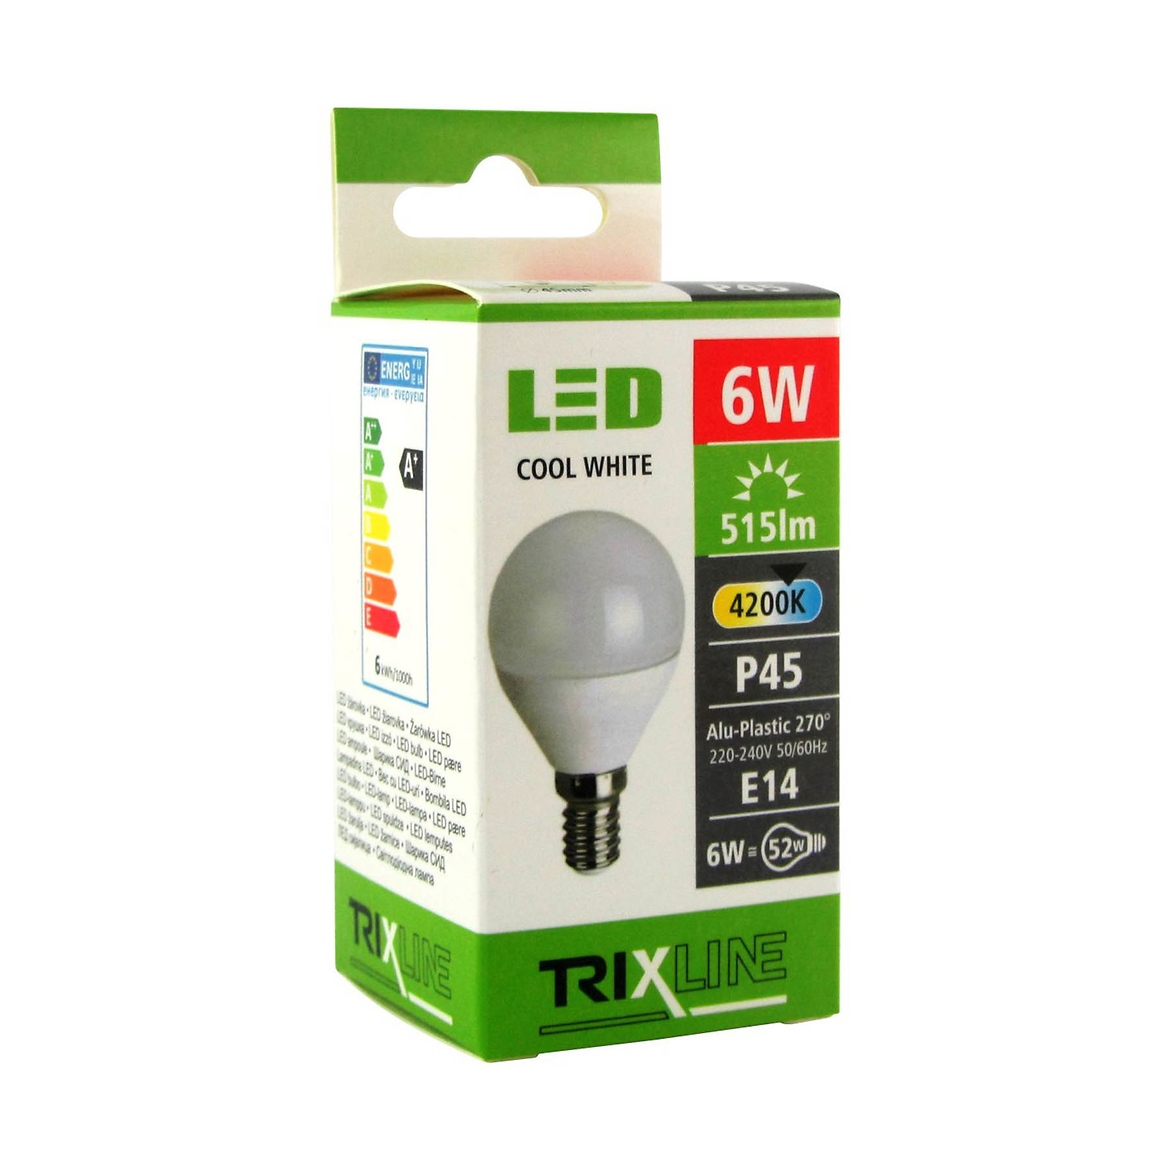 Glühbirne BC 6W TR LED E14 G45 4200K Trixline,2